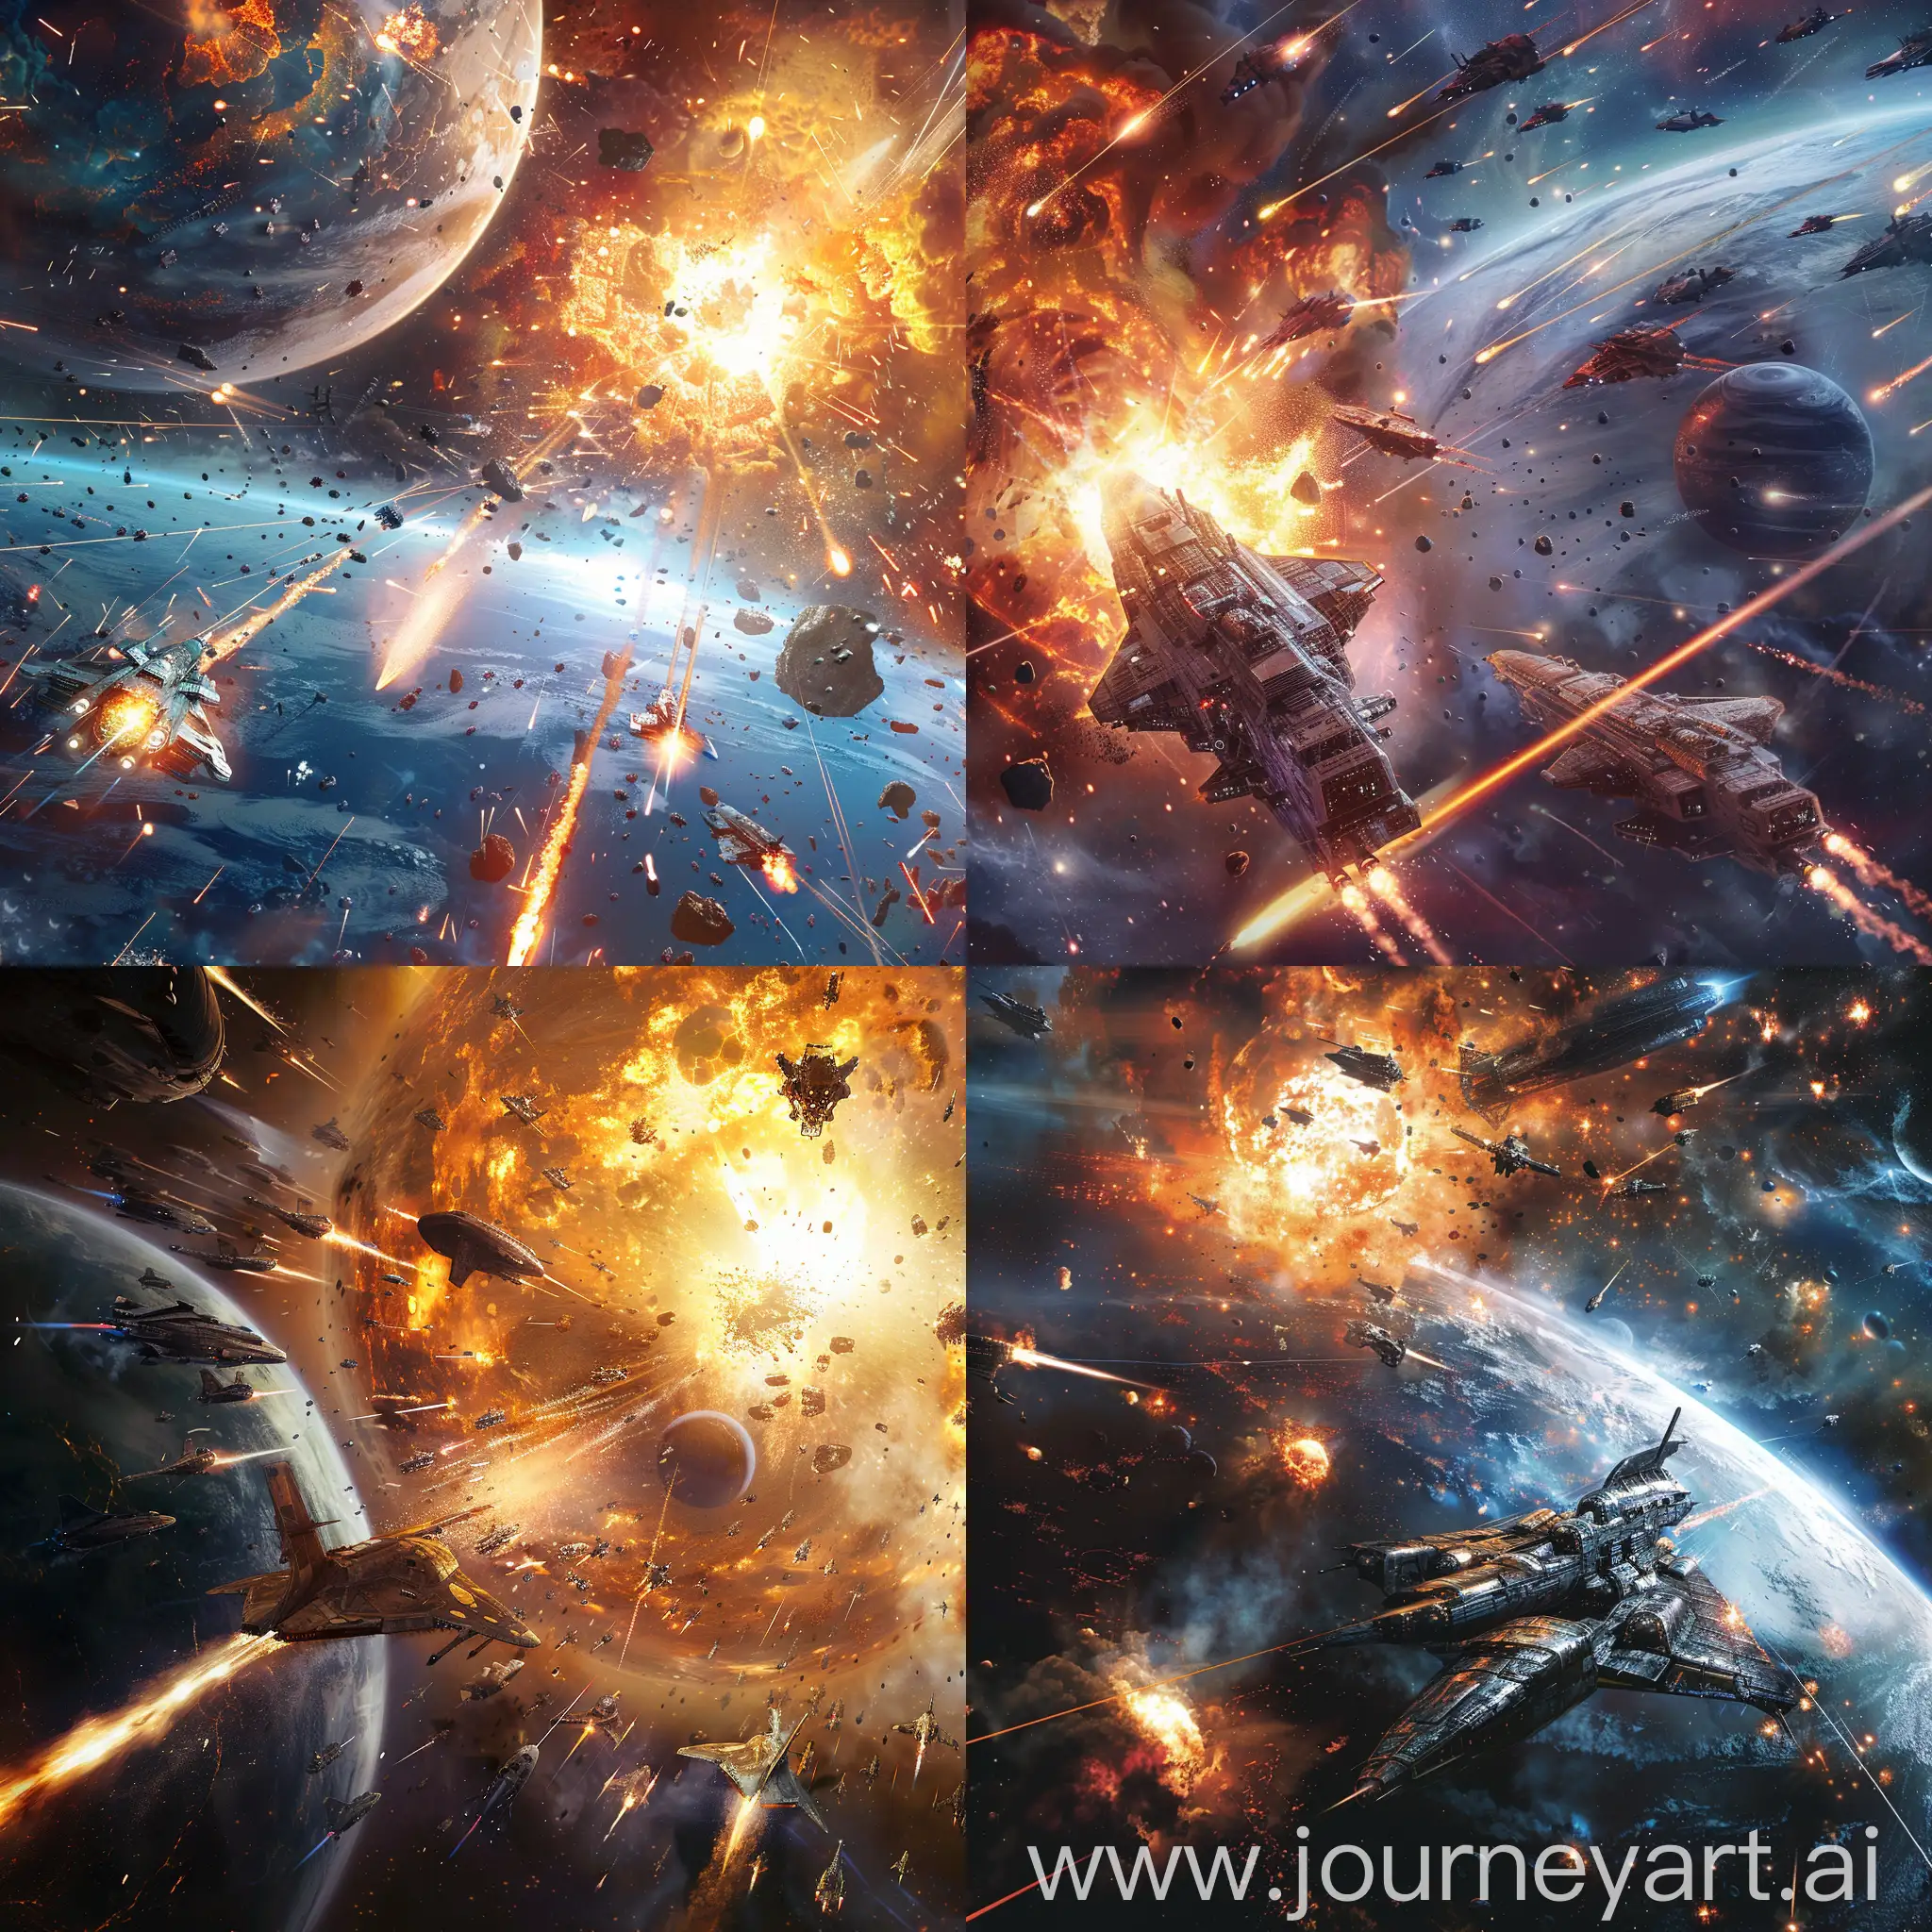 Epic-Galactic-Showdown-Massive-Spaceships-in-Cosmic-Warfare